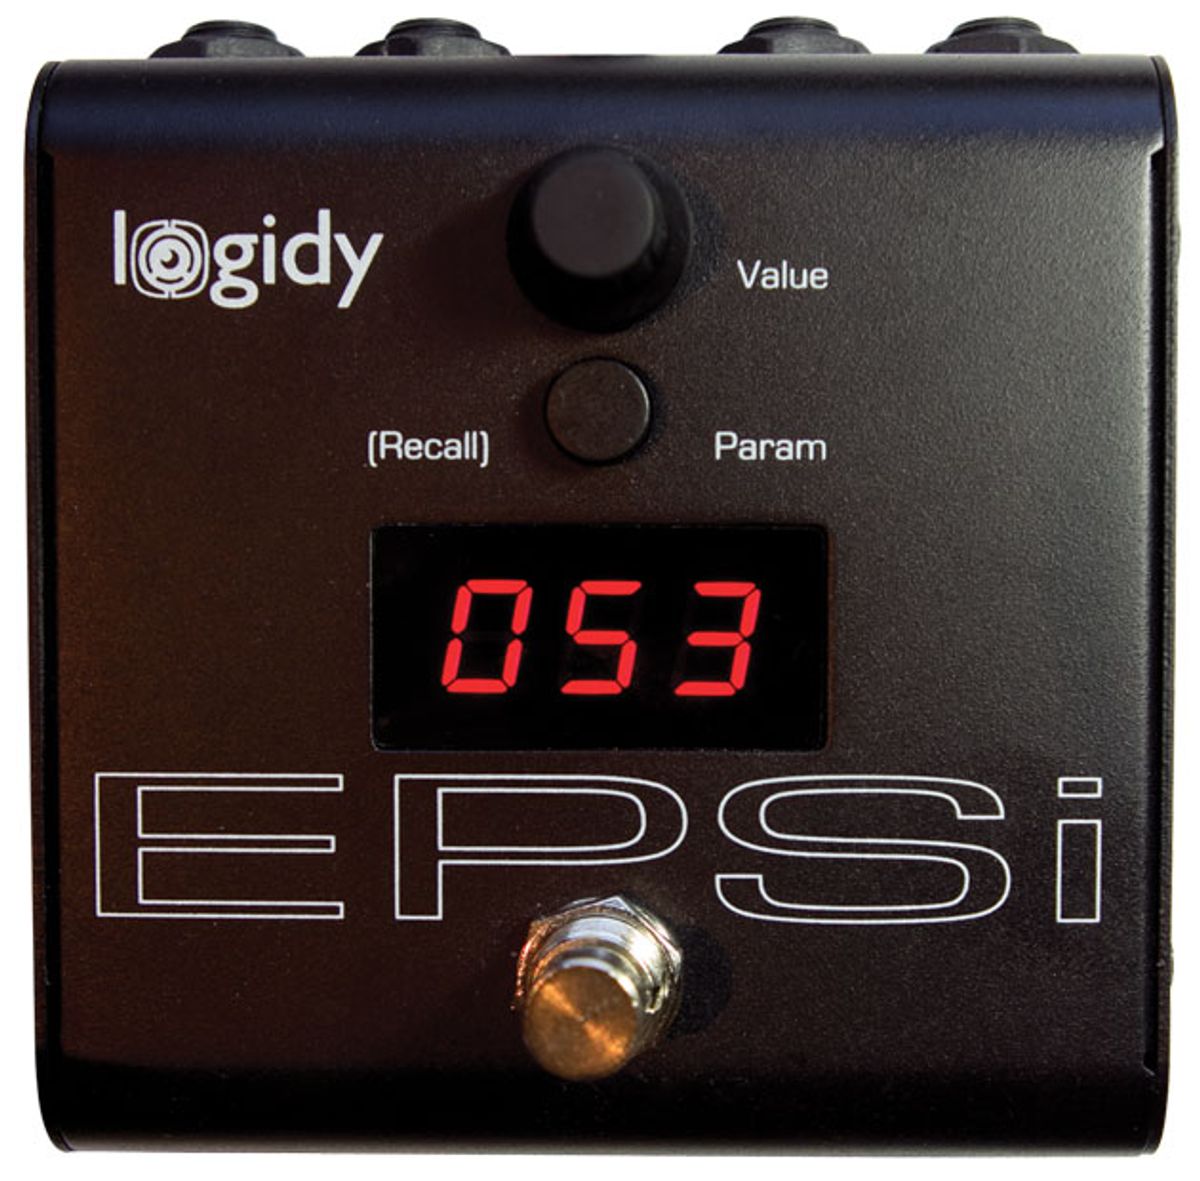 Logidy EPSi Review